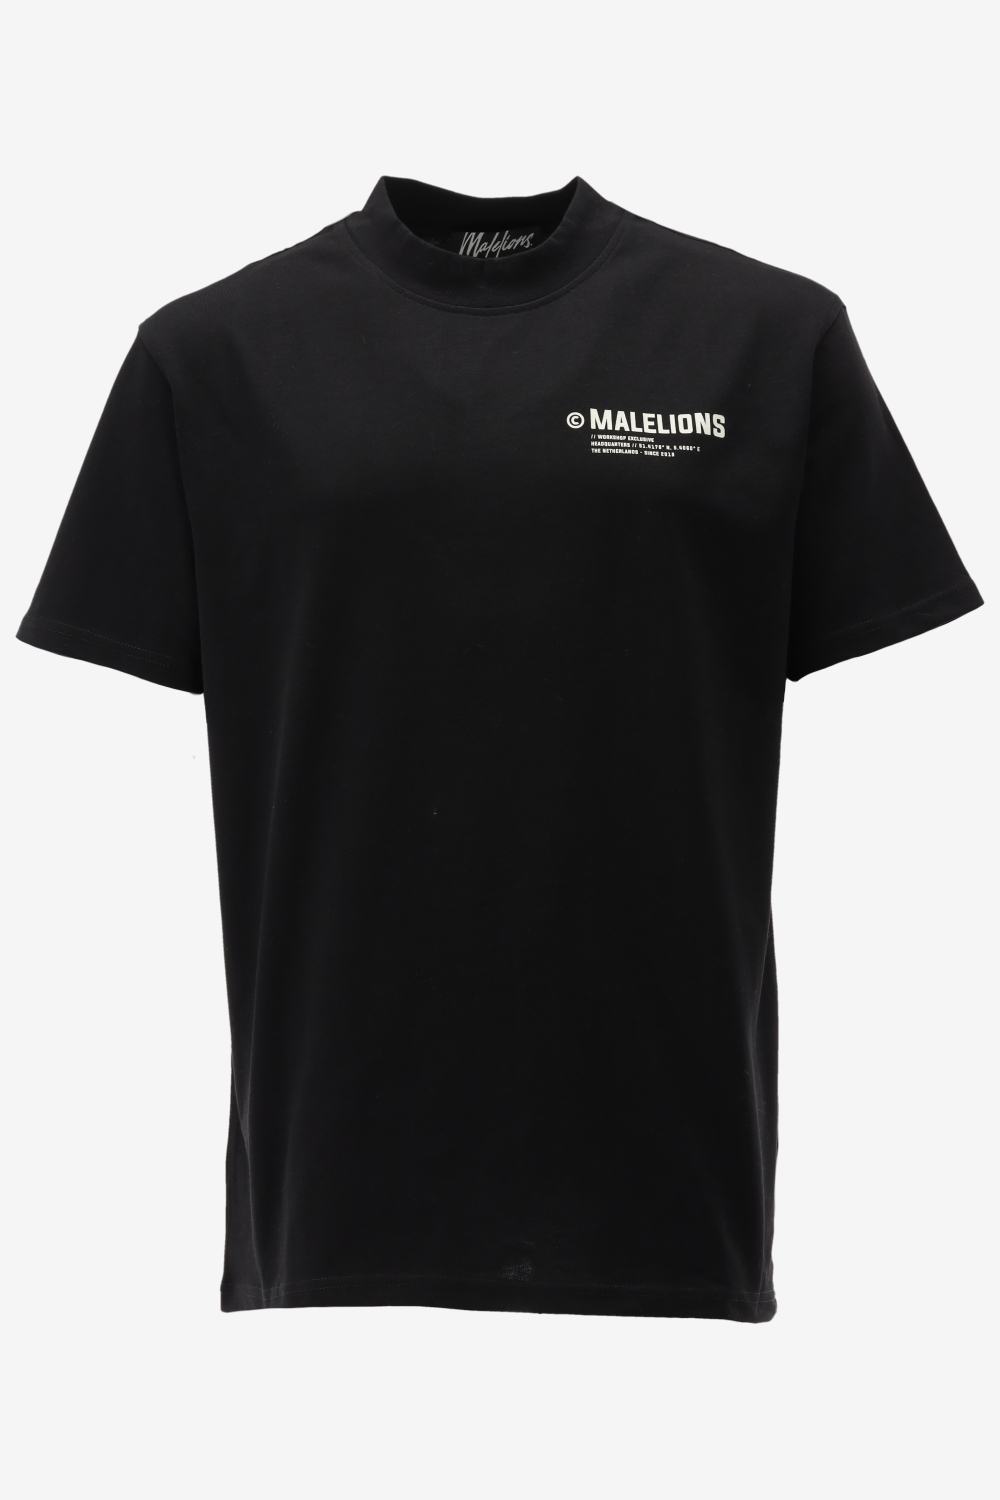 Malelions T shirt WORKSHOP T SHIRT